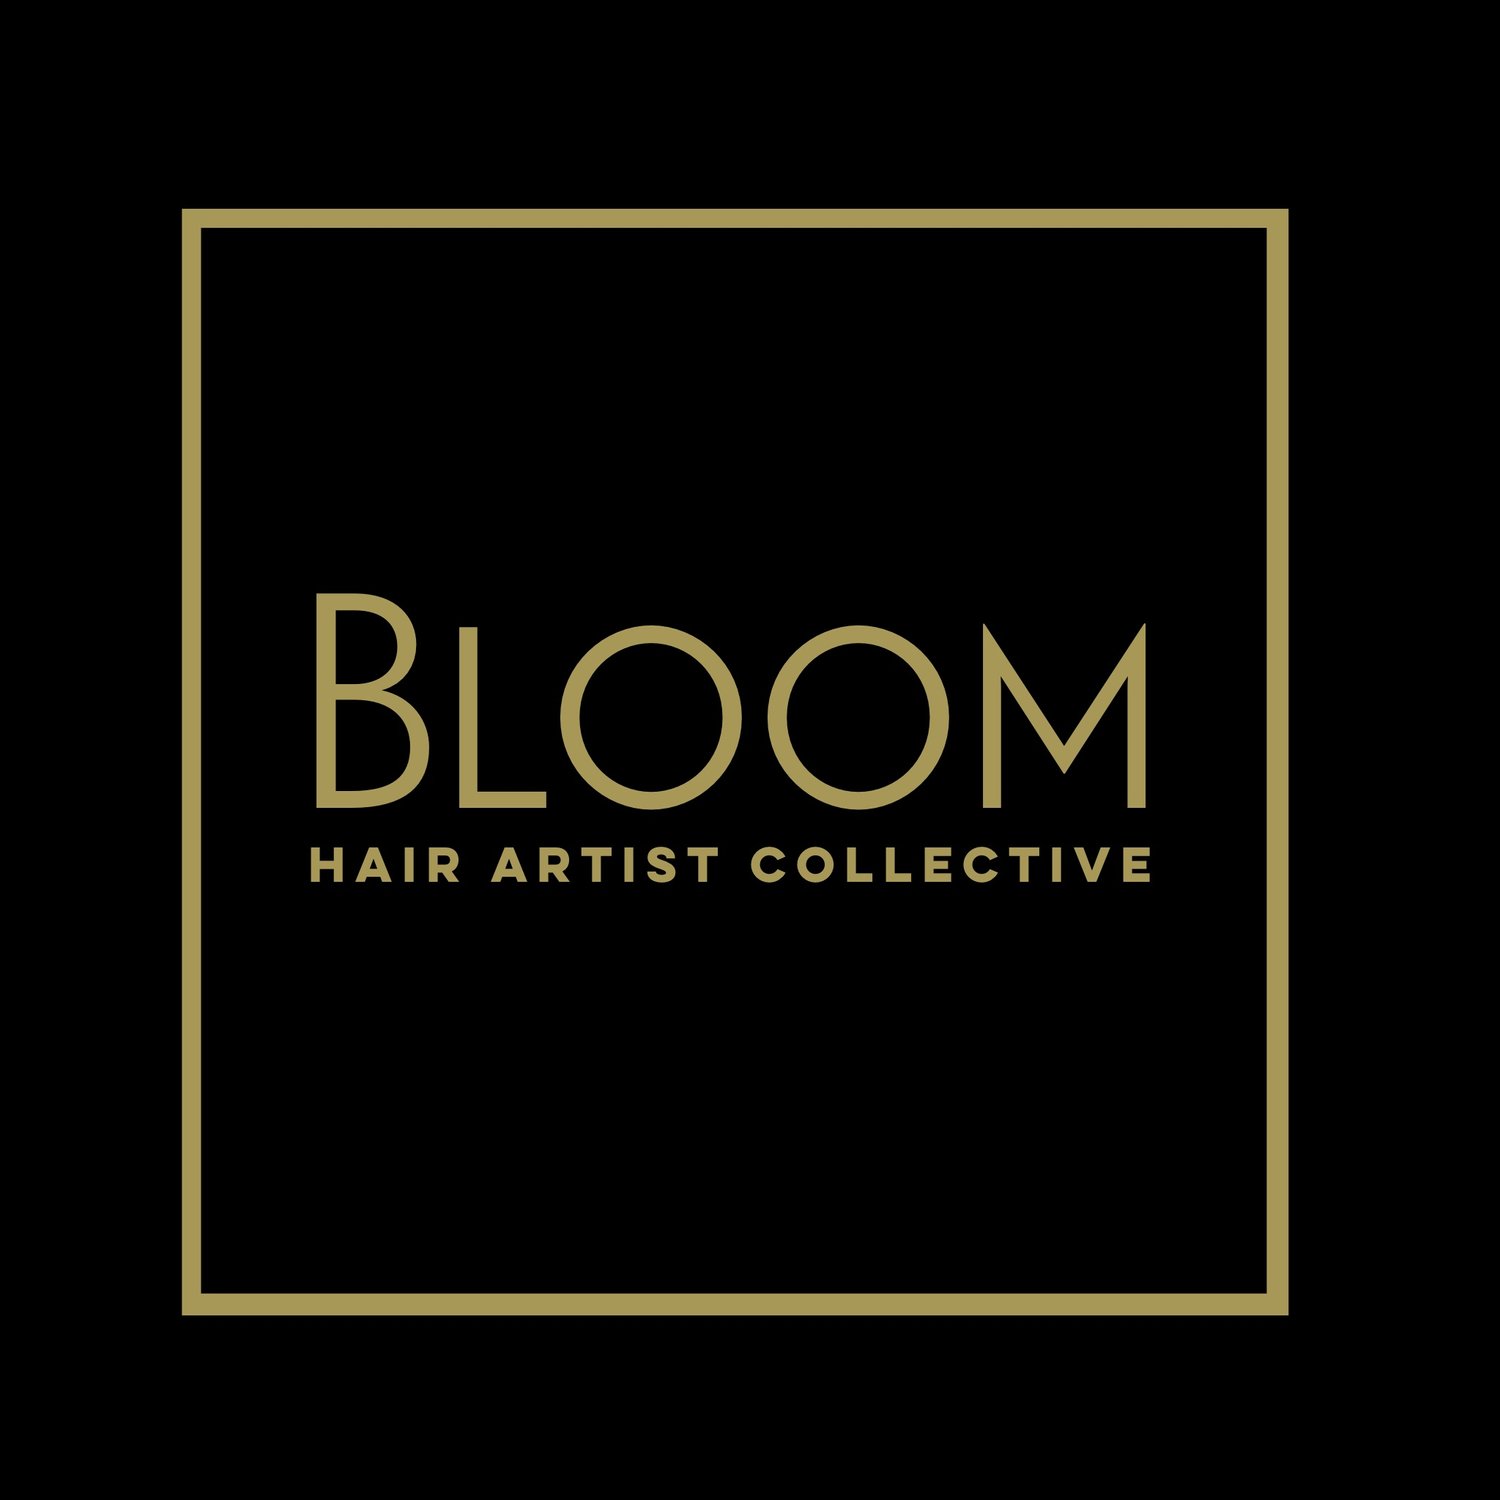 Bloom Hair Artist Collective